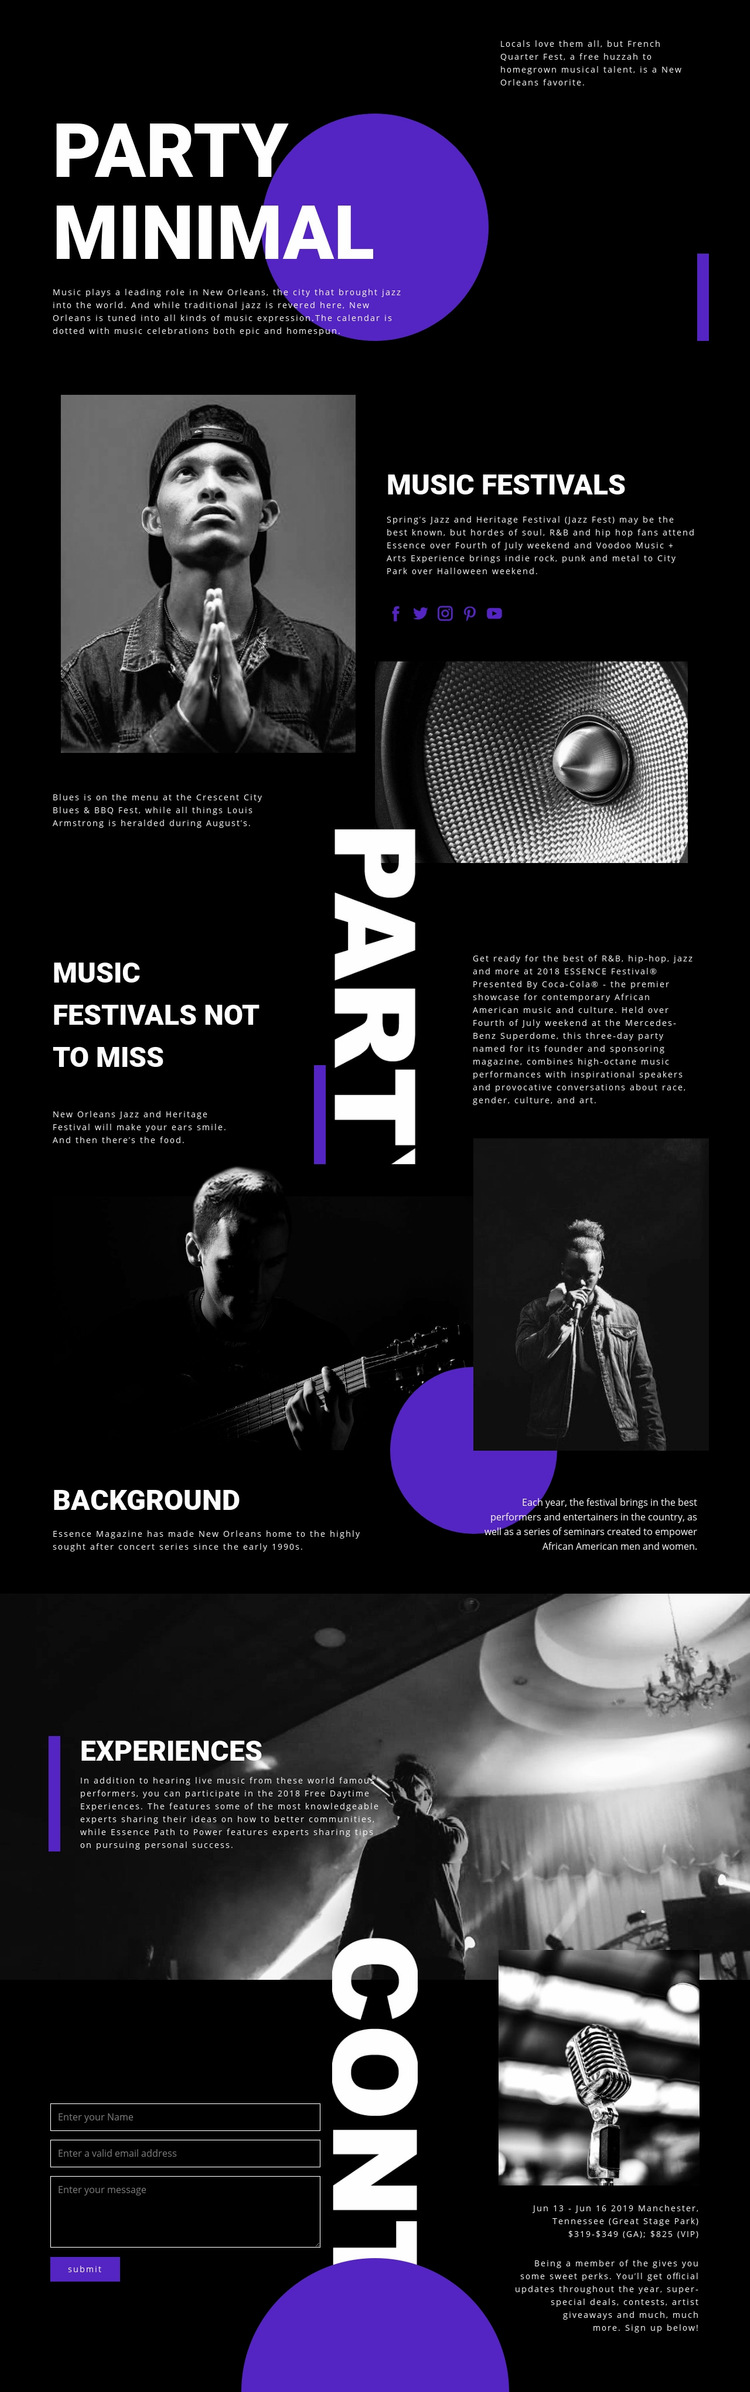 Music Festival Web Page Design